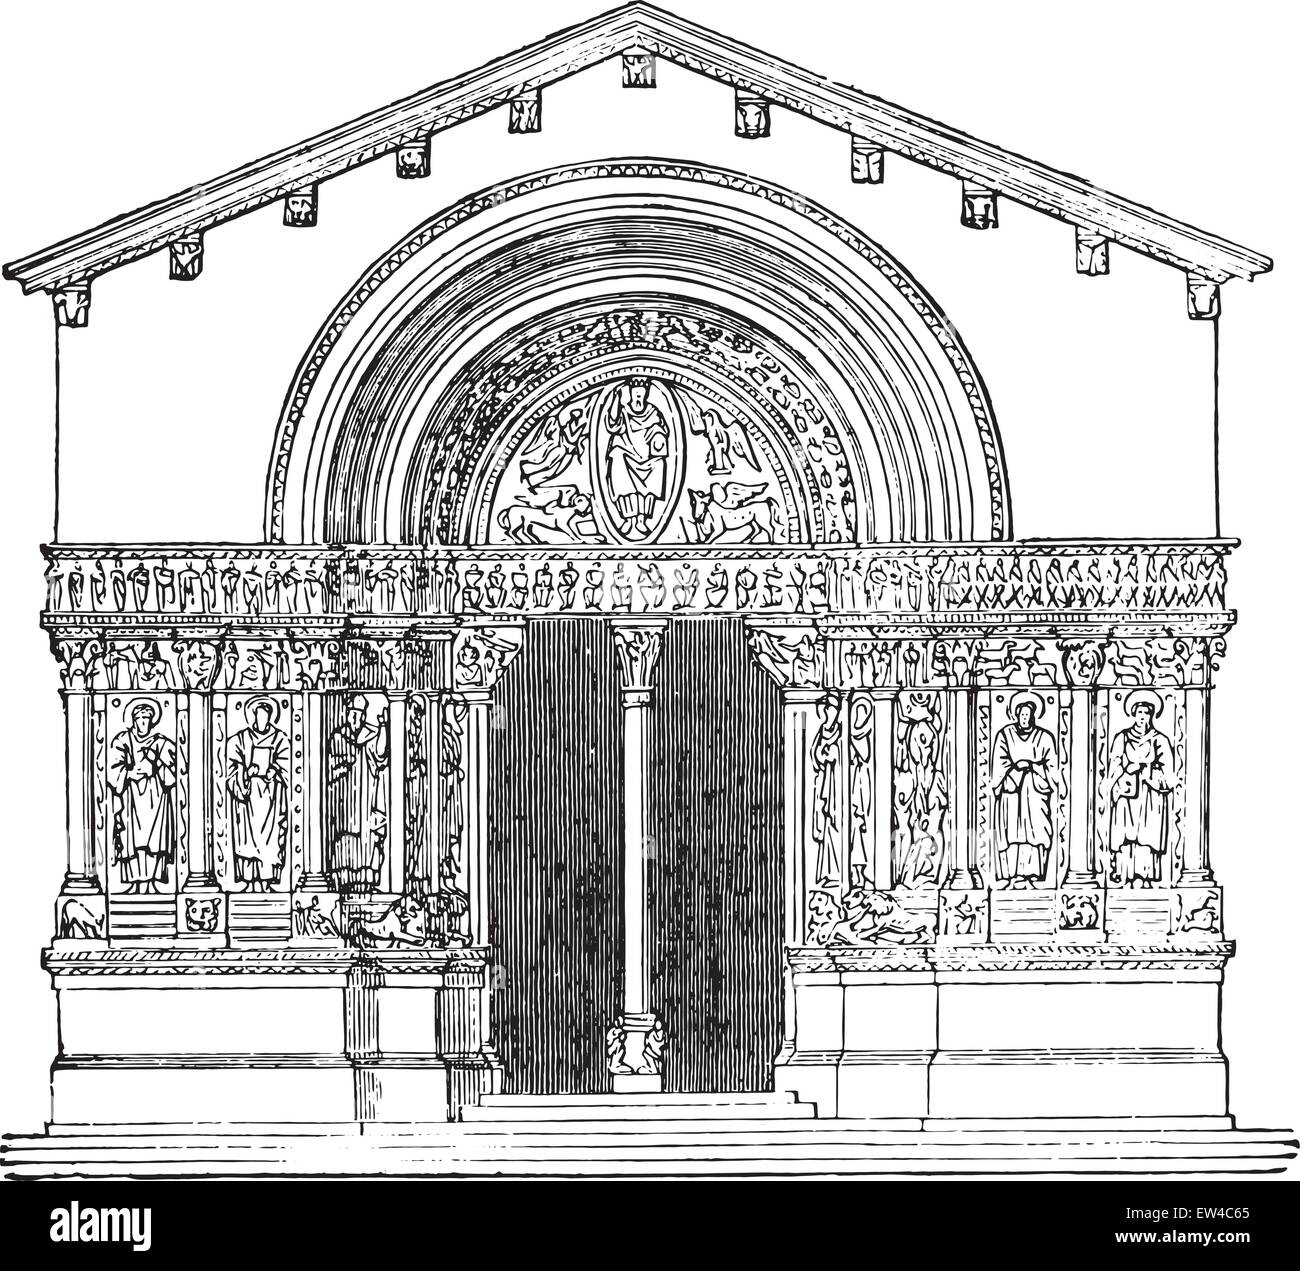 St. Trophime Church, Arles, vintage engraved illustration. Industrial encyclopedia E.-O. Lami - 1875. Stock Vector